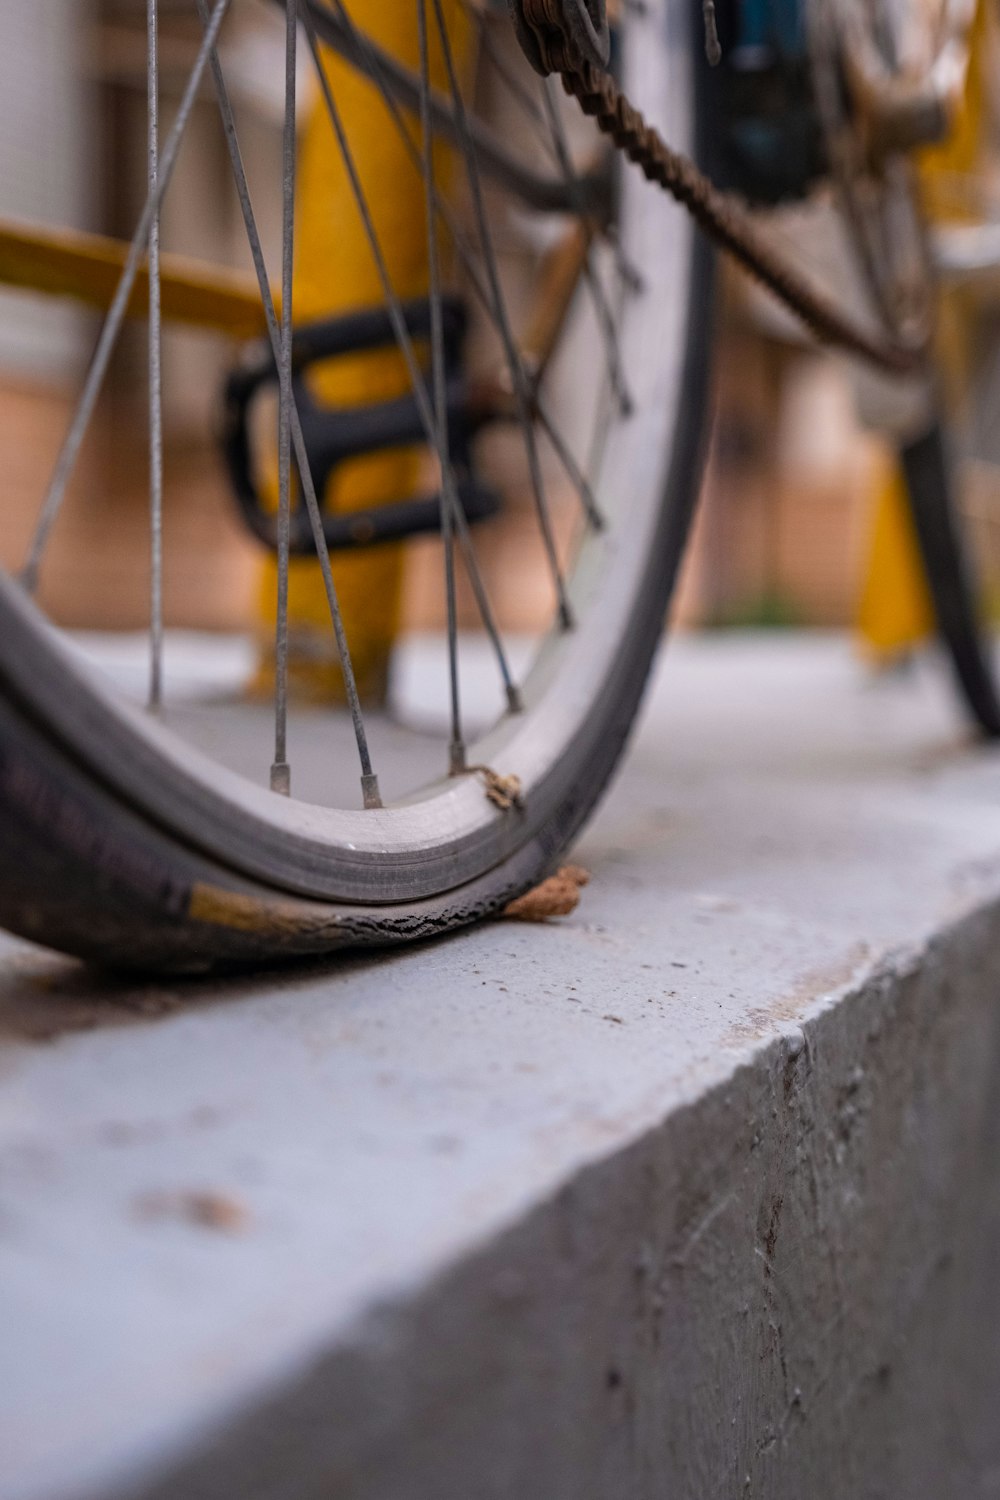 a close up of a bike tire on a concrete slab